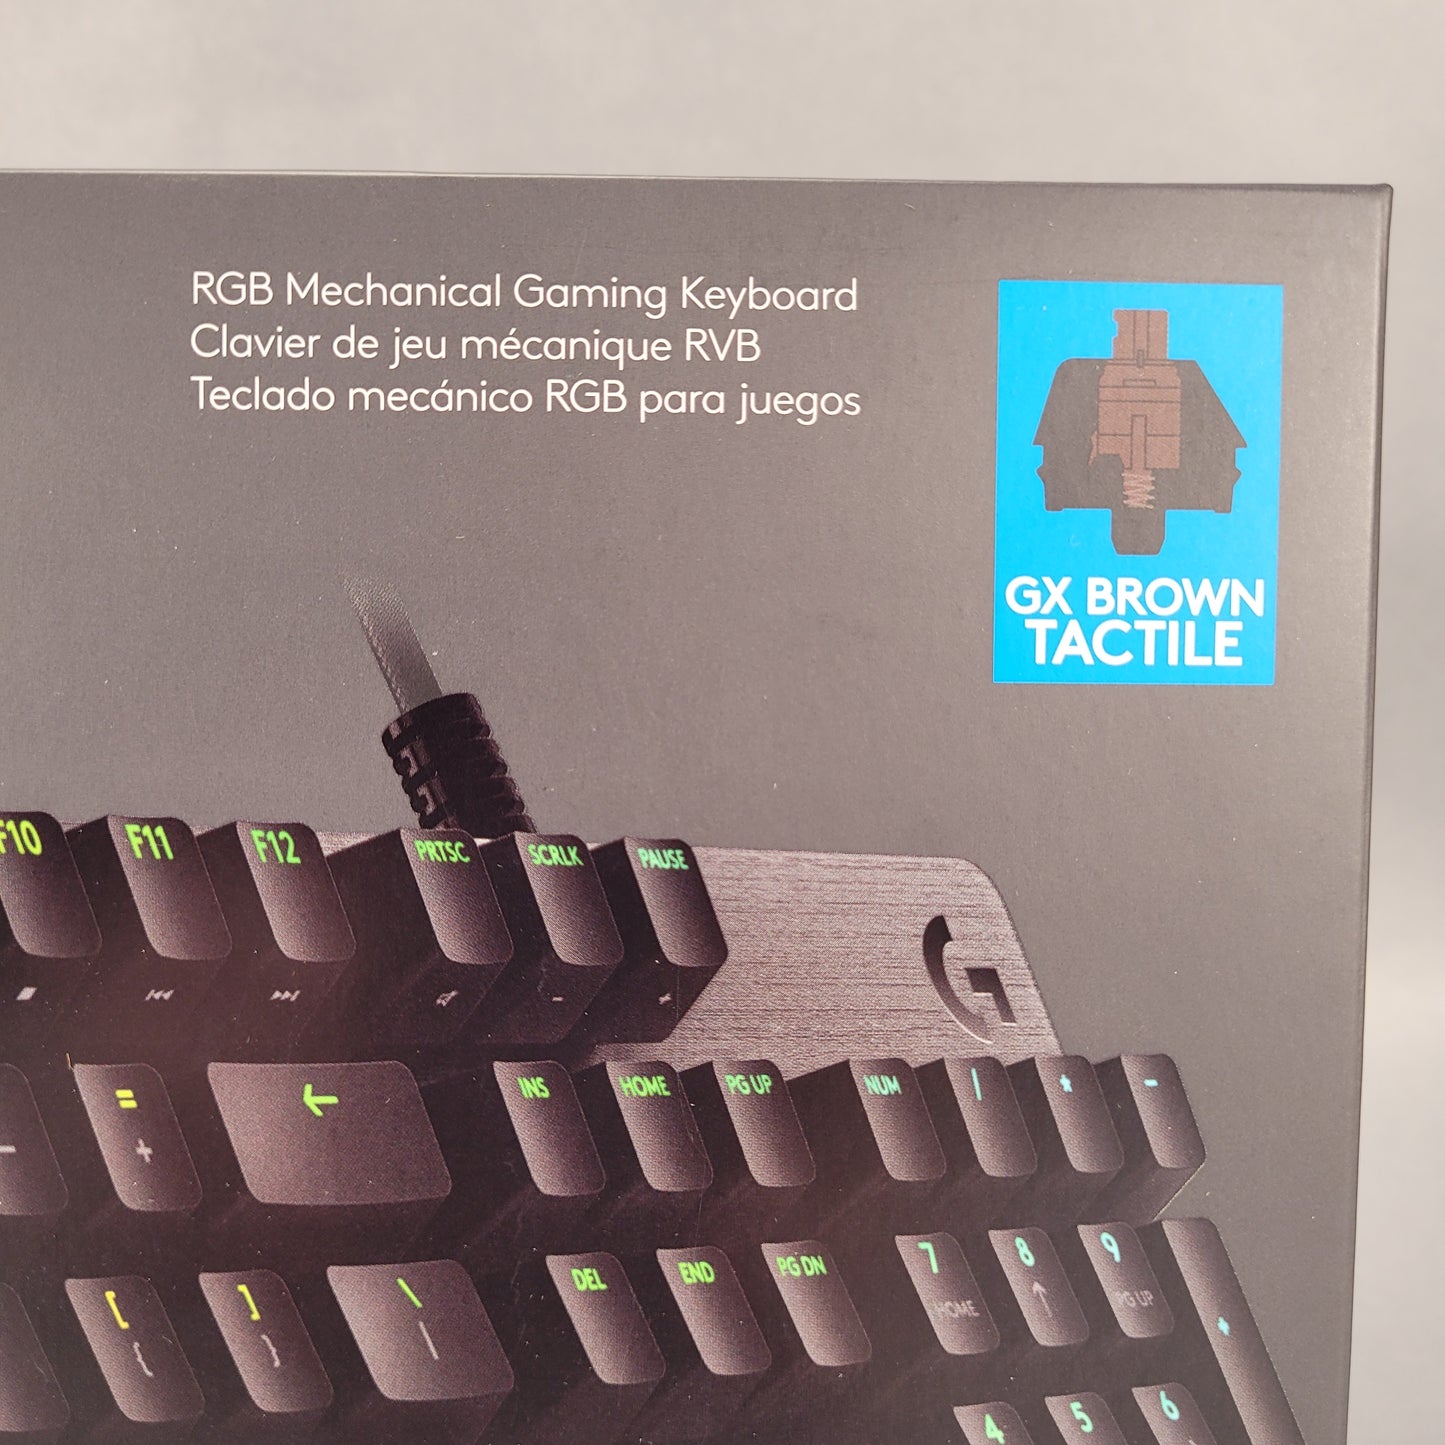 Logitech G512 Carbon RGB Mechanical Gaming Keyboard (Brand New)